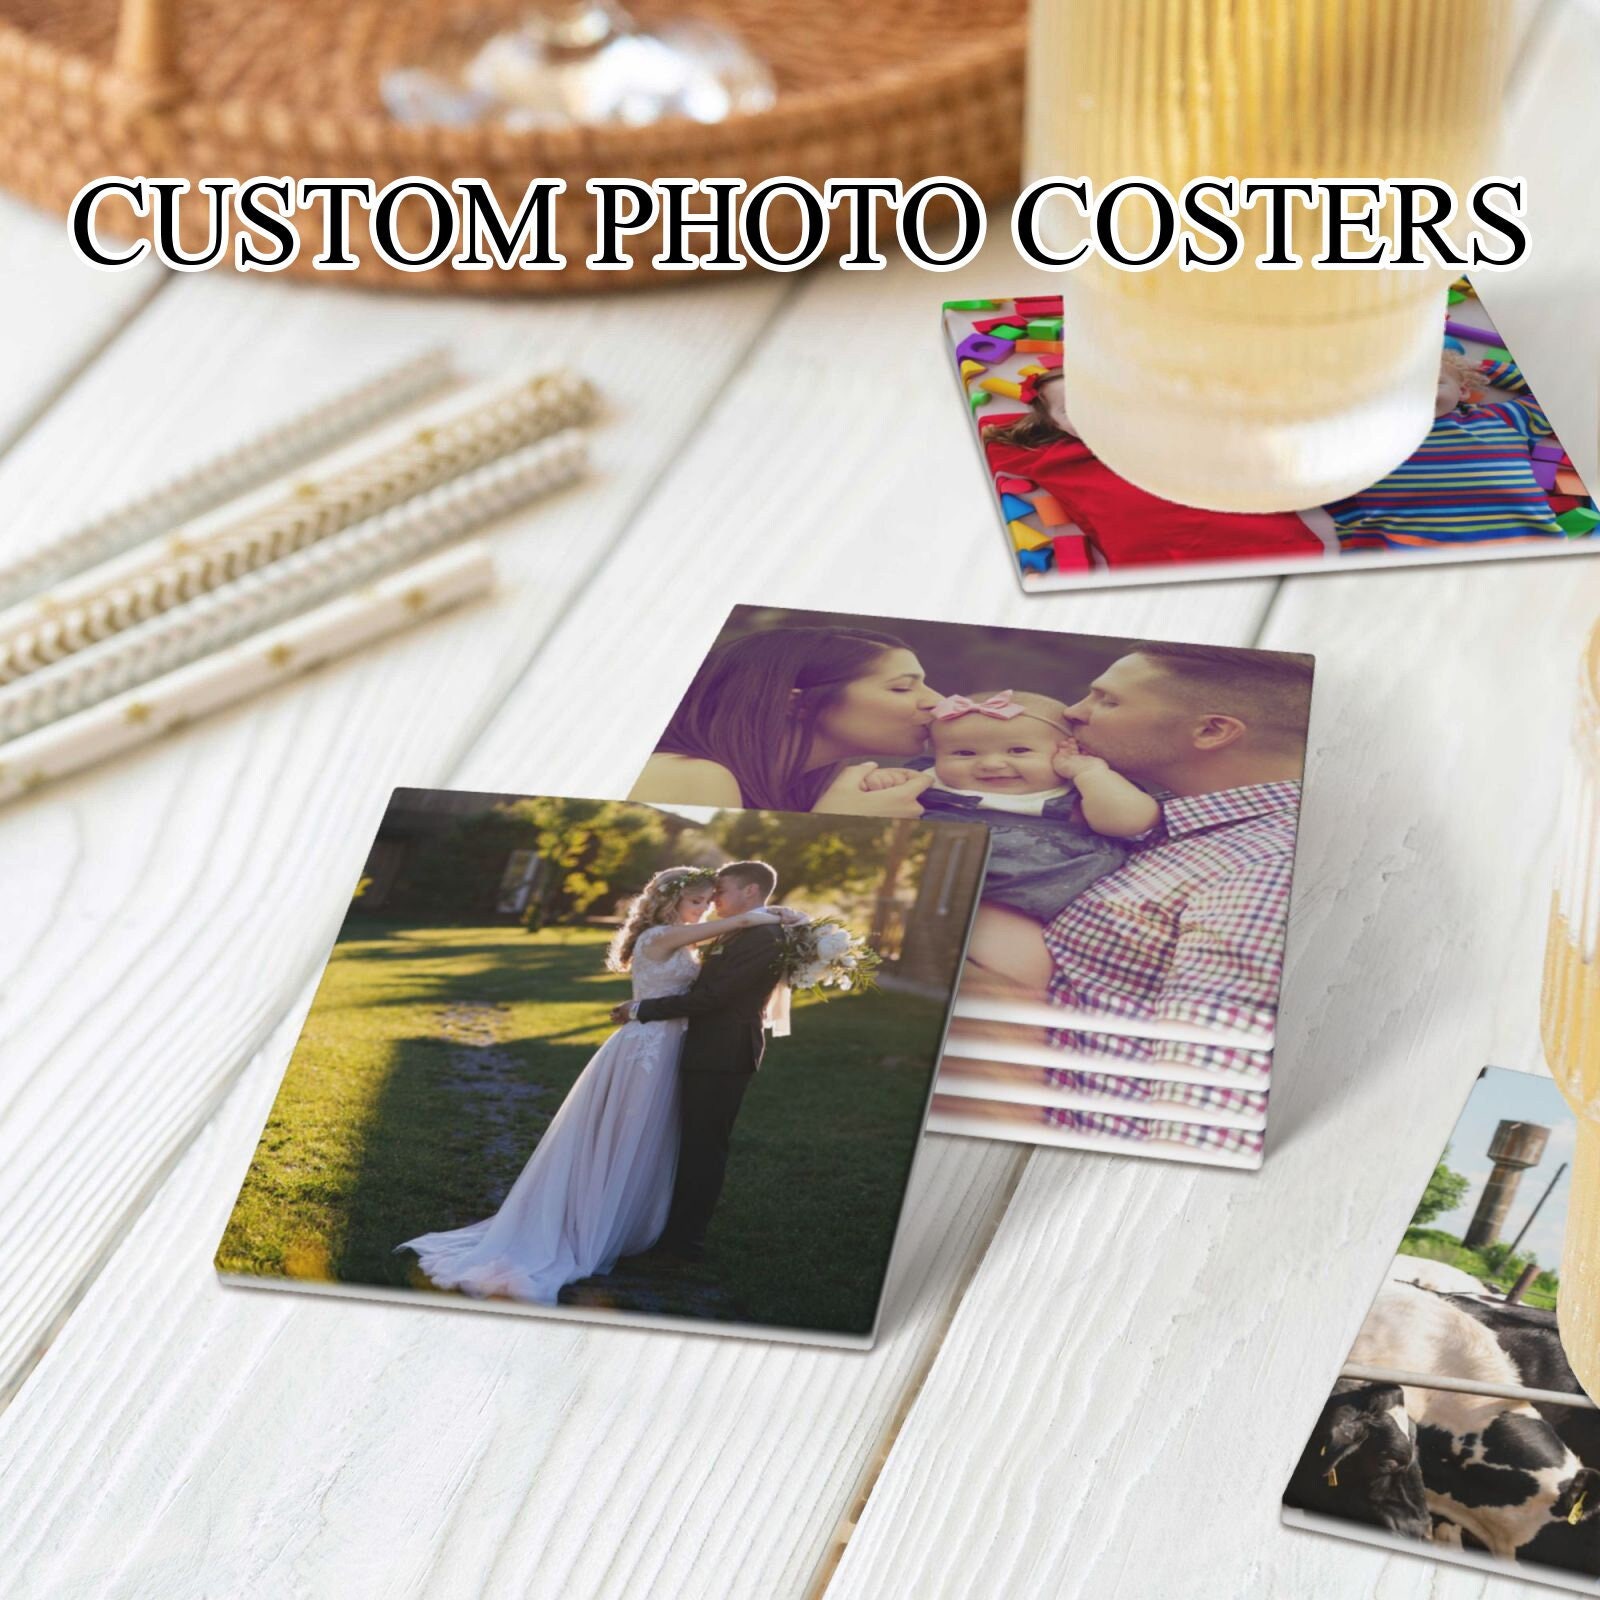 Mr. & Mrs. Personalized Stone Coaster Set, Wedding Gifts, Gifts